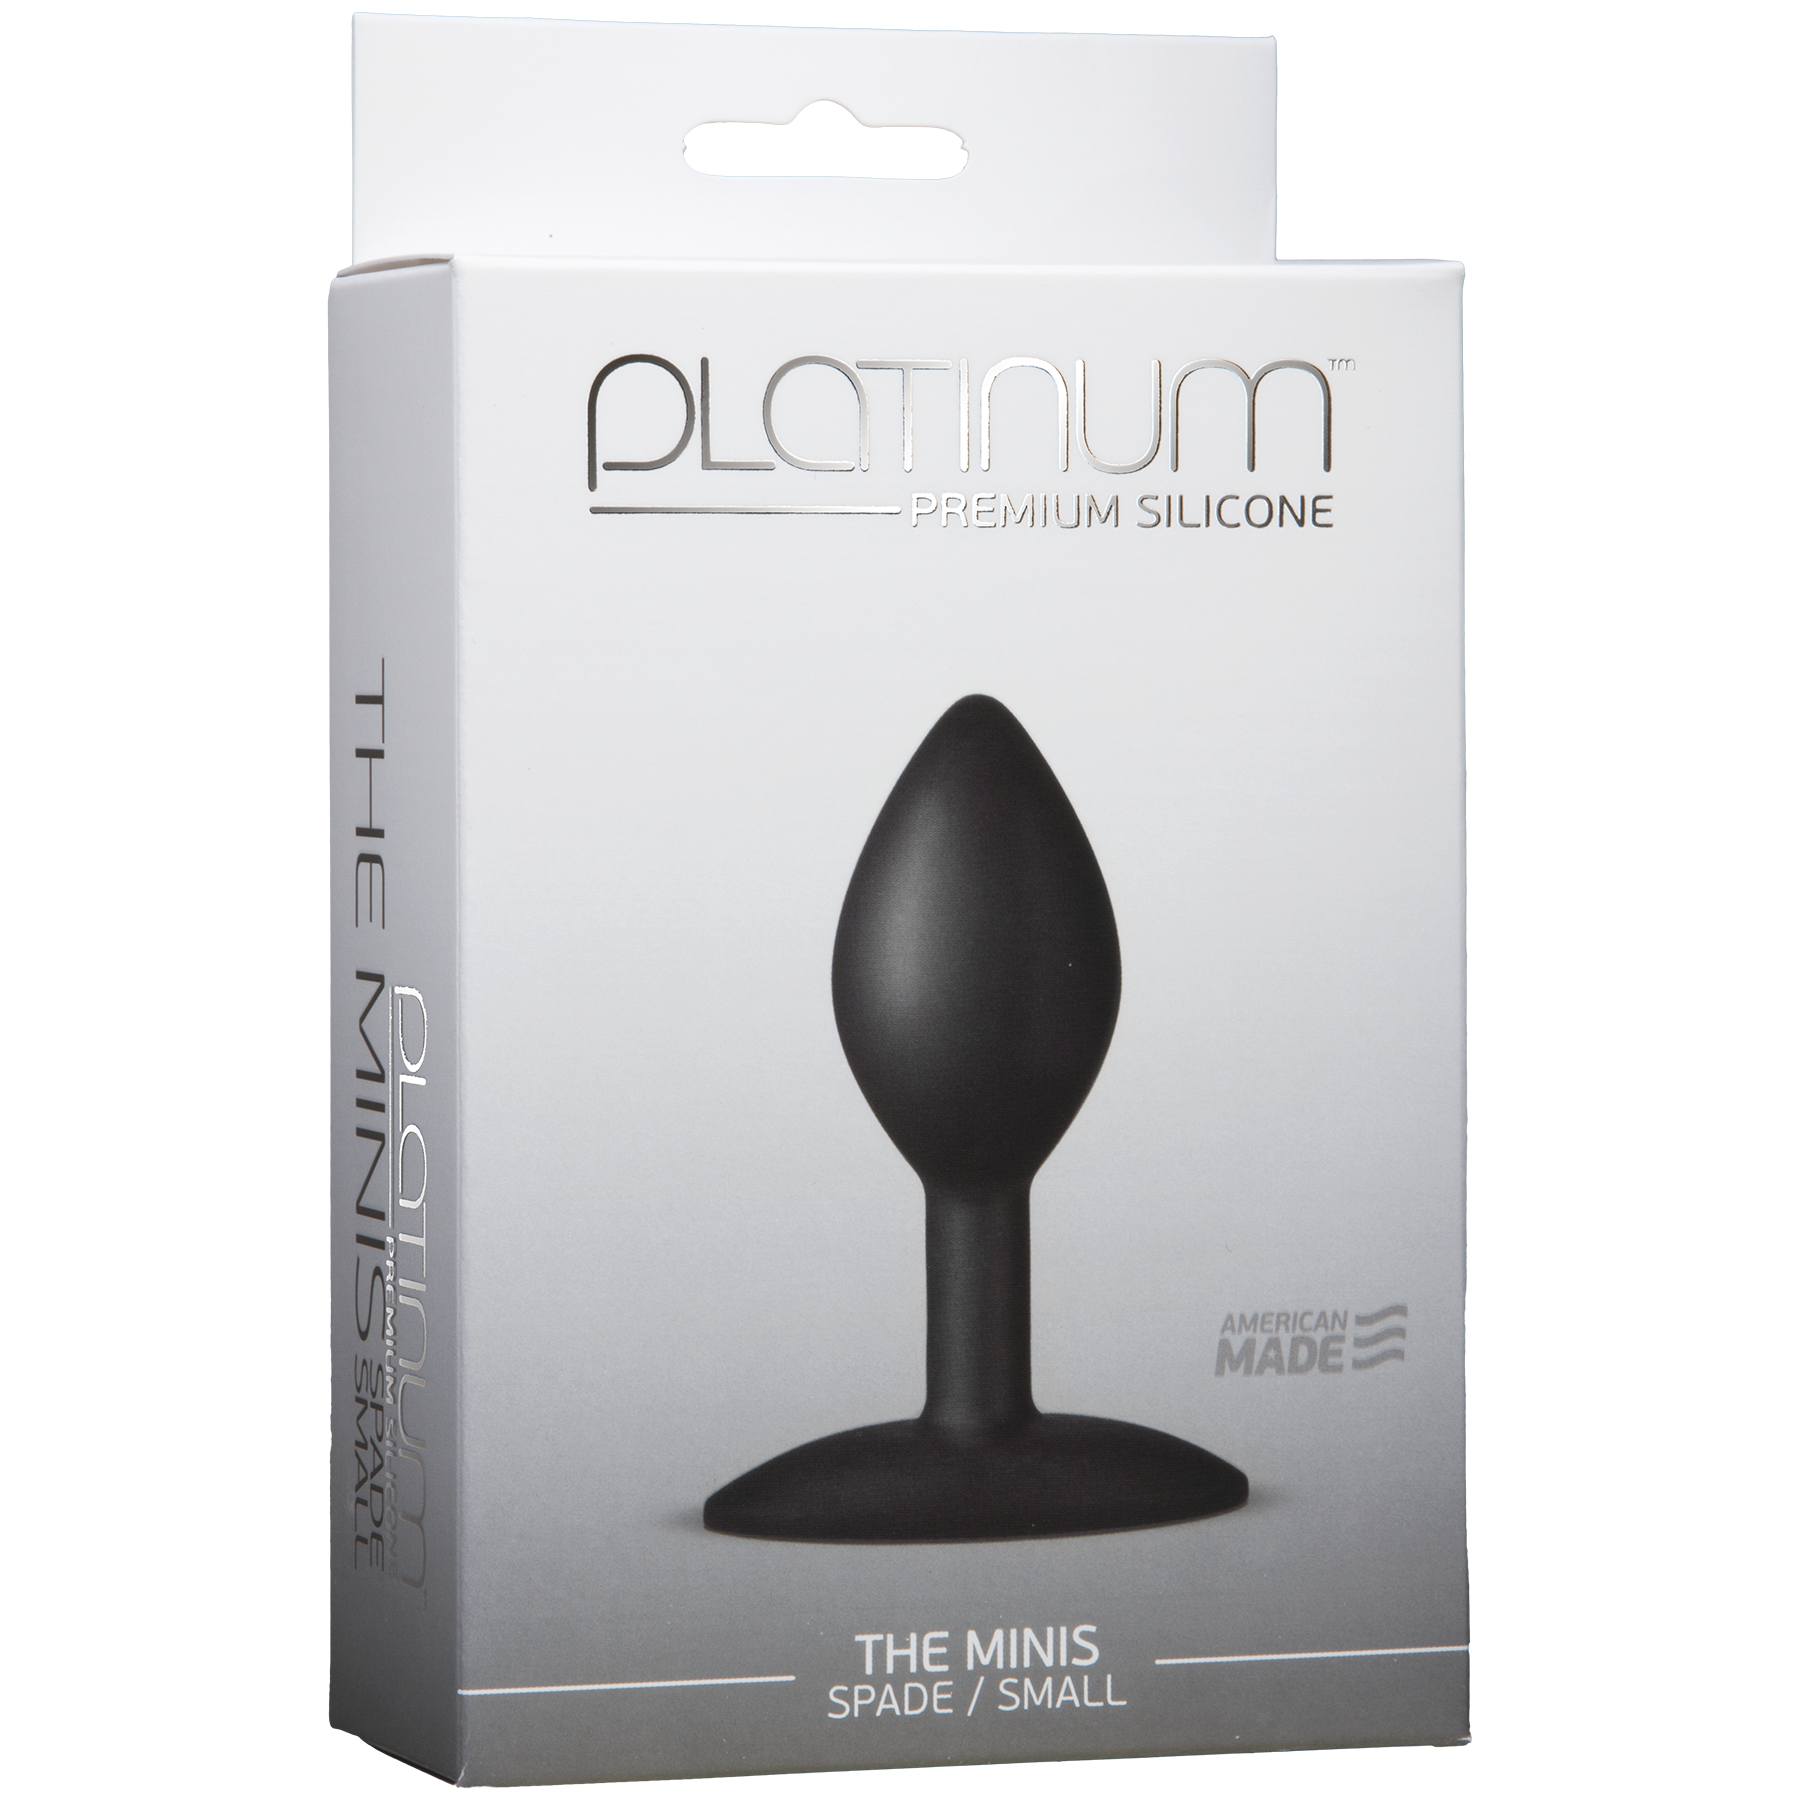 Platinum Premium Silicone The Mini's Spade - Small, Black - Thorn & Feather Sex Toy Canada